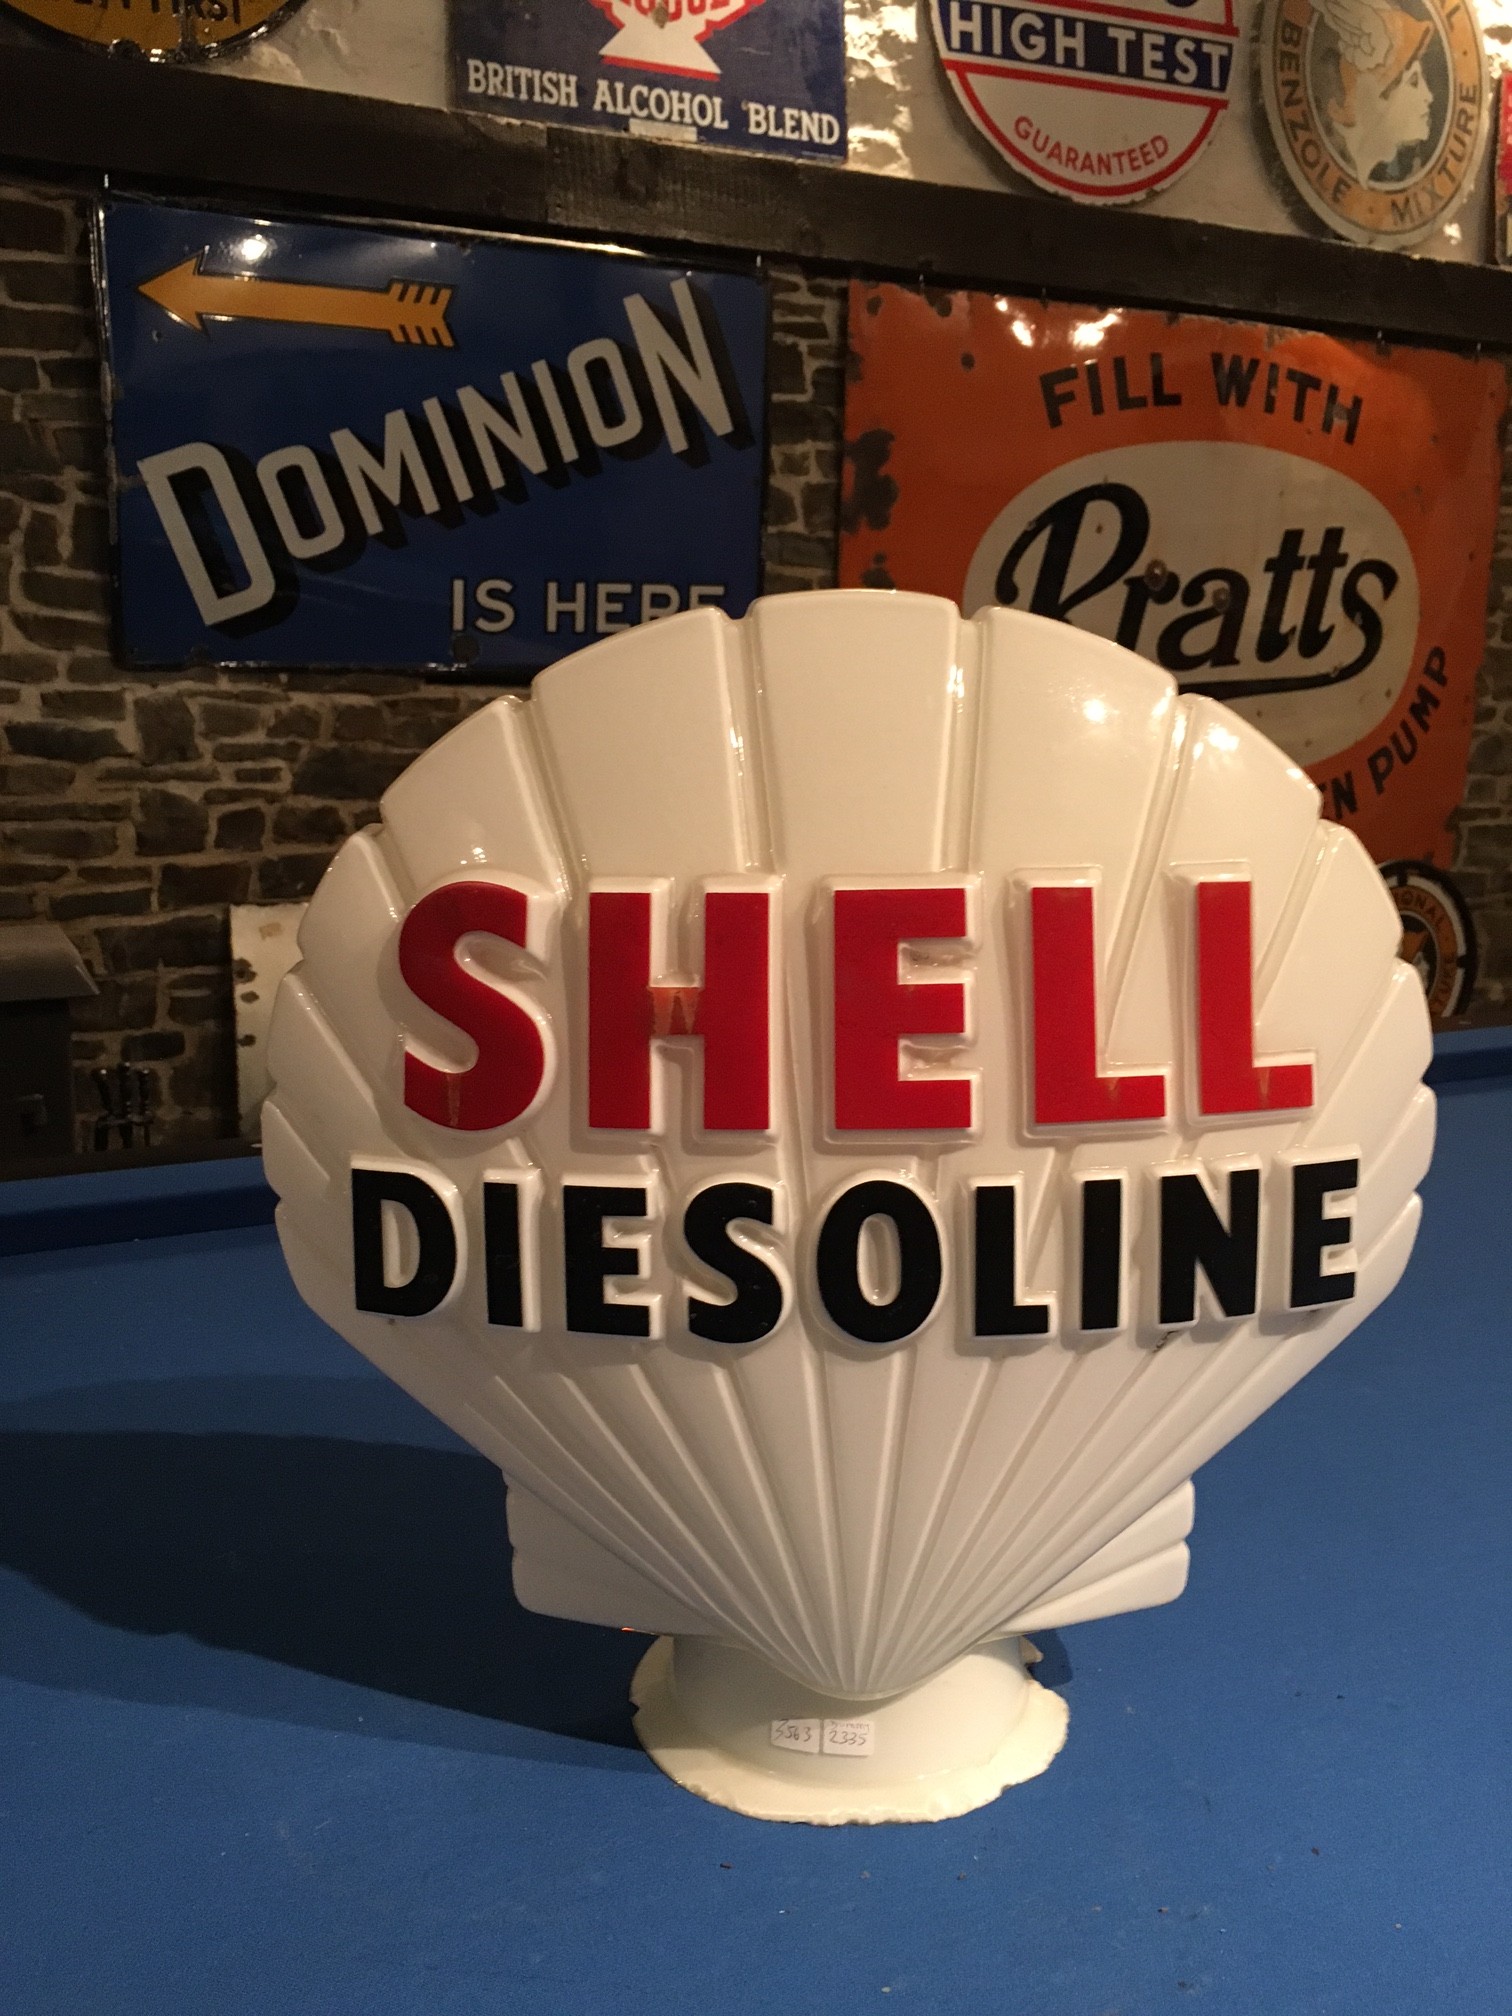 Globe Shell "DIESOLINE" en forme de coquillage